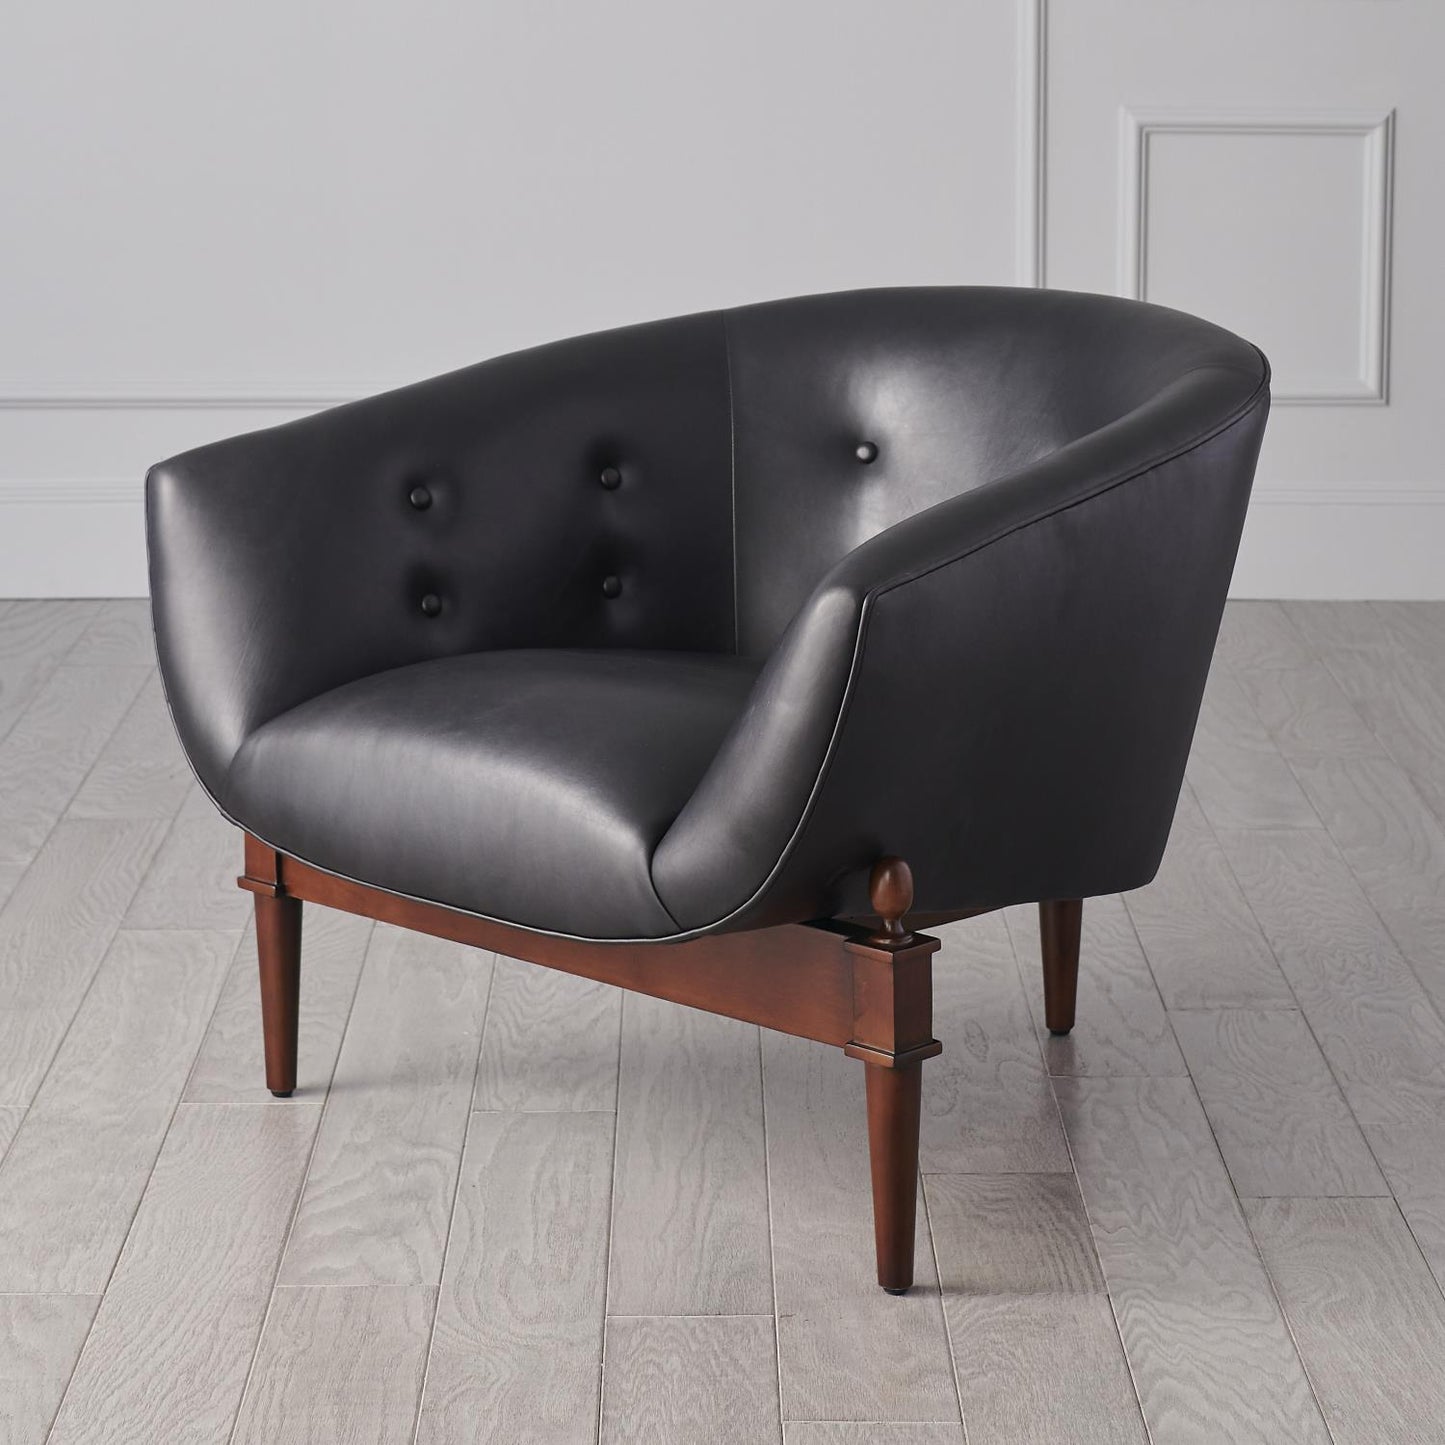 Mimi Leather Chair - Black - Grats Decor Interior Design & Build Inc.